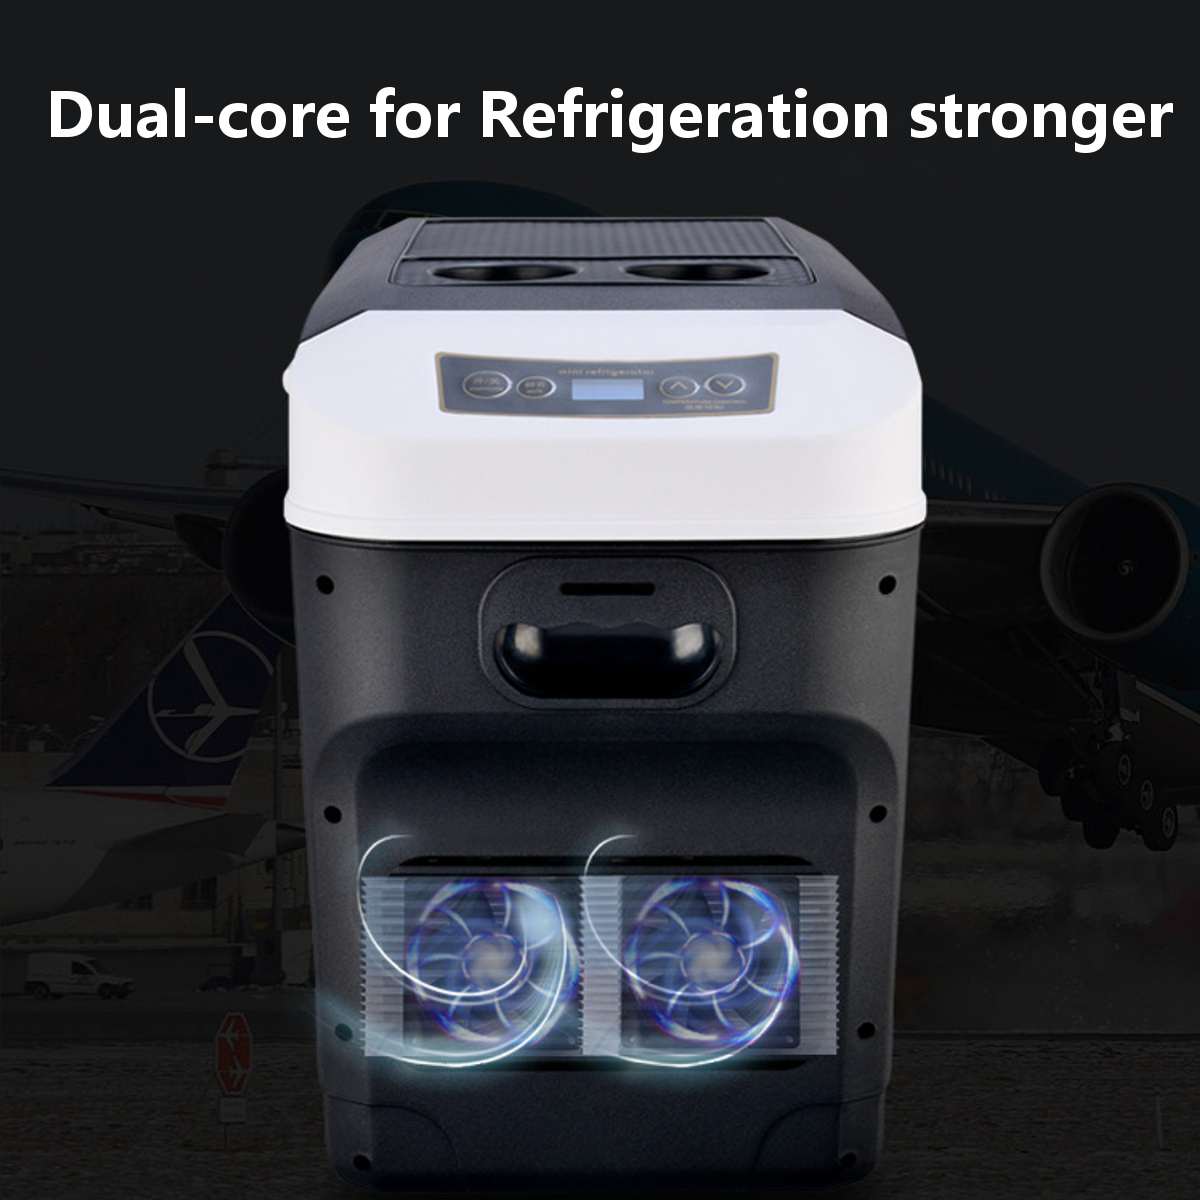 20L Home/Car Refrigerator Automoble Mini Fridge Refrigerators Freezer Cooling Box frigobar Food Fruit Storage Fridge Compressor